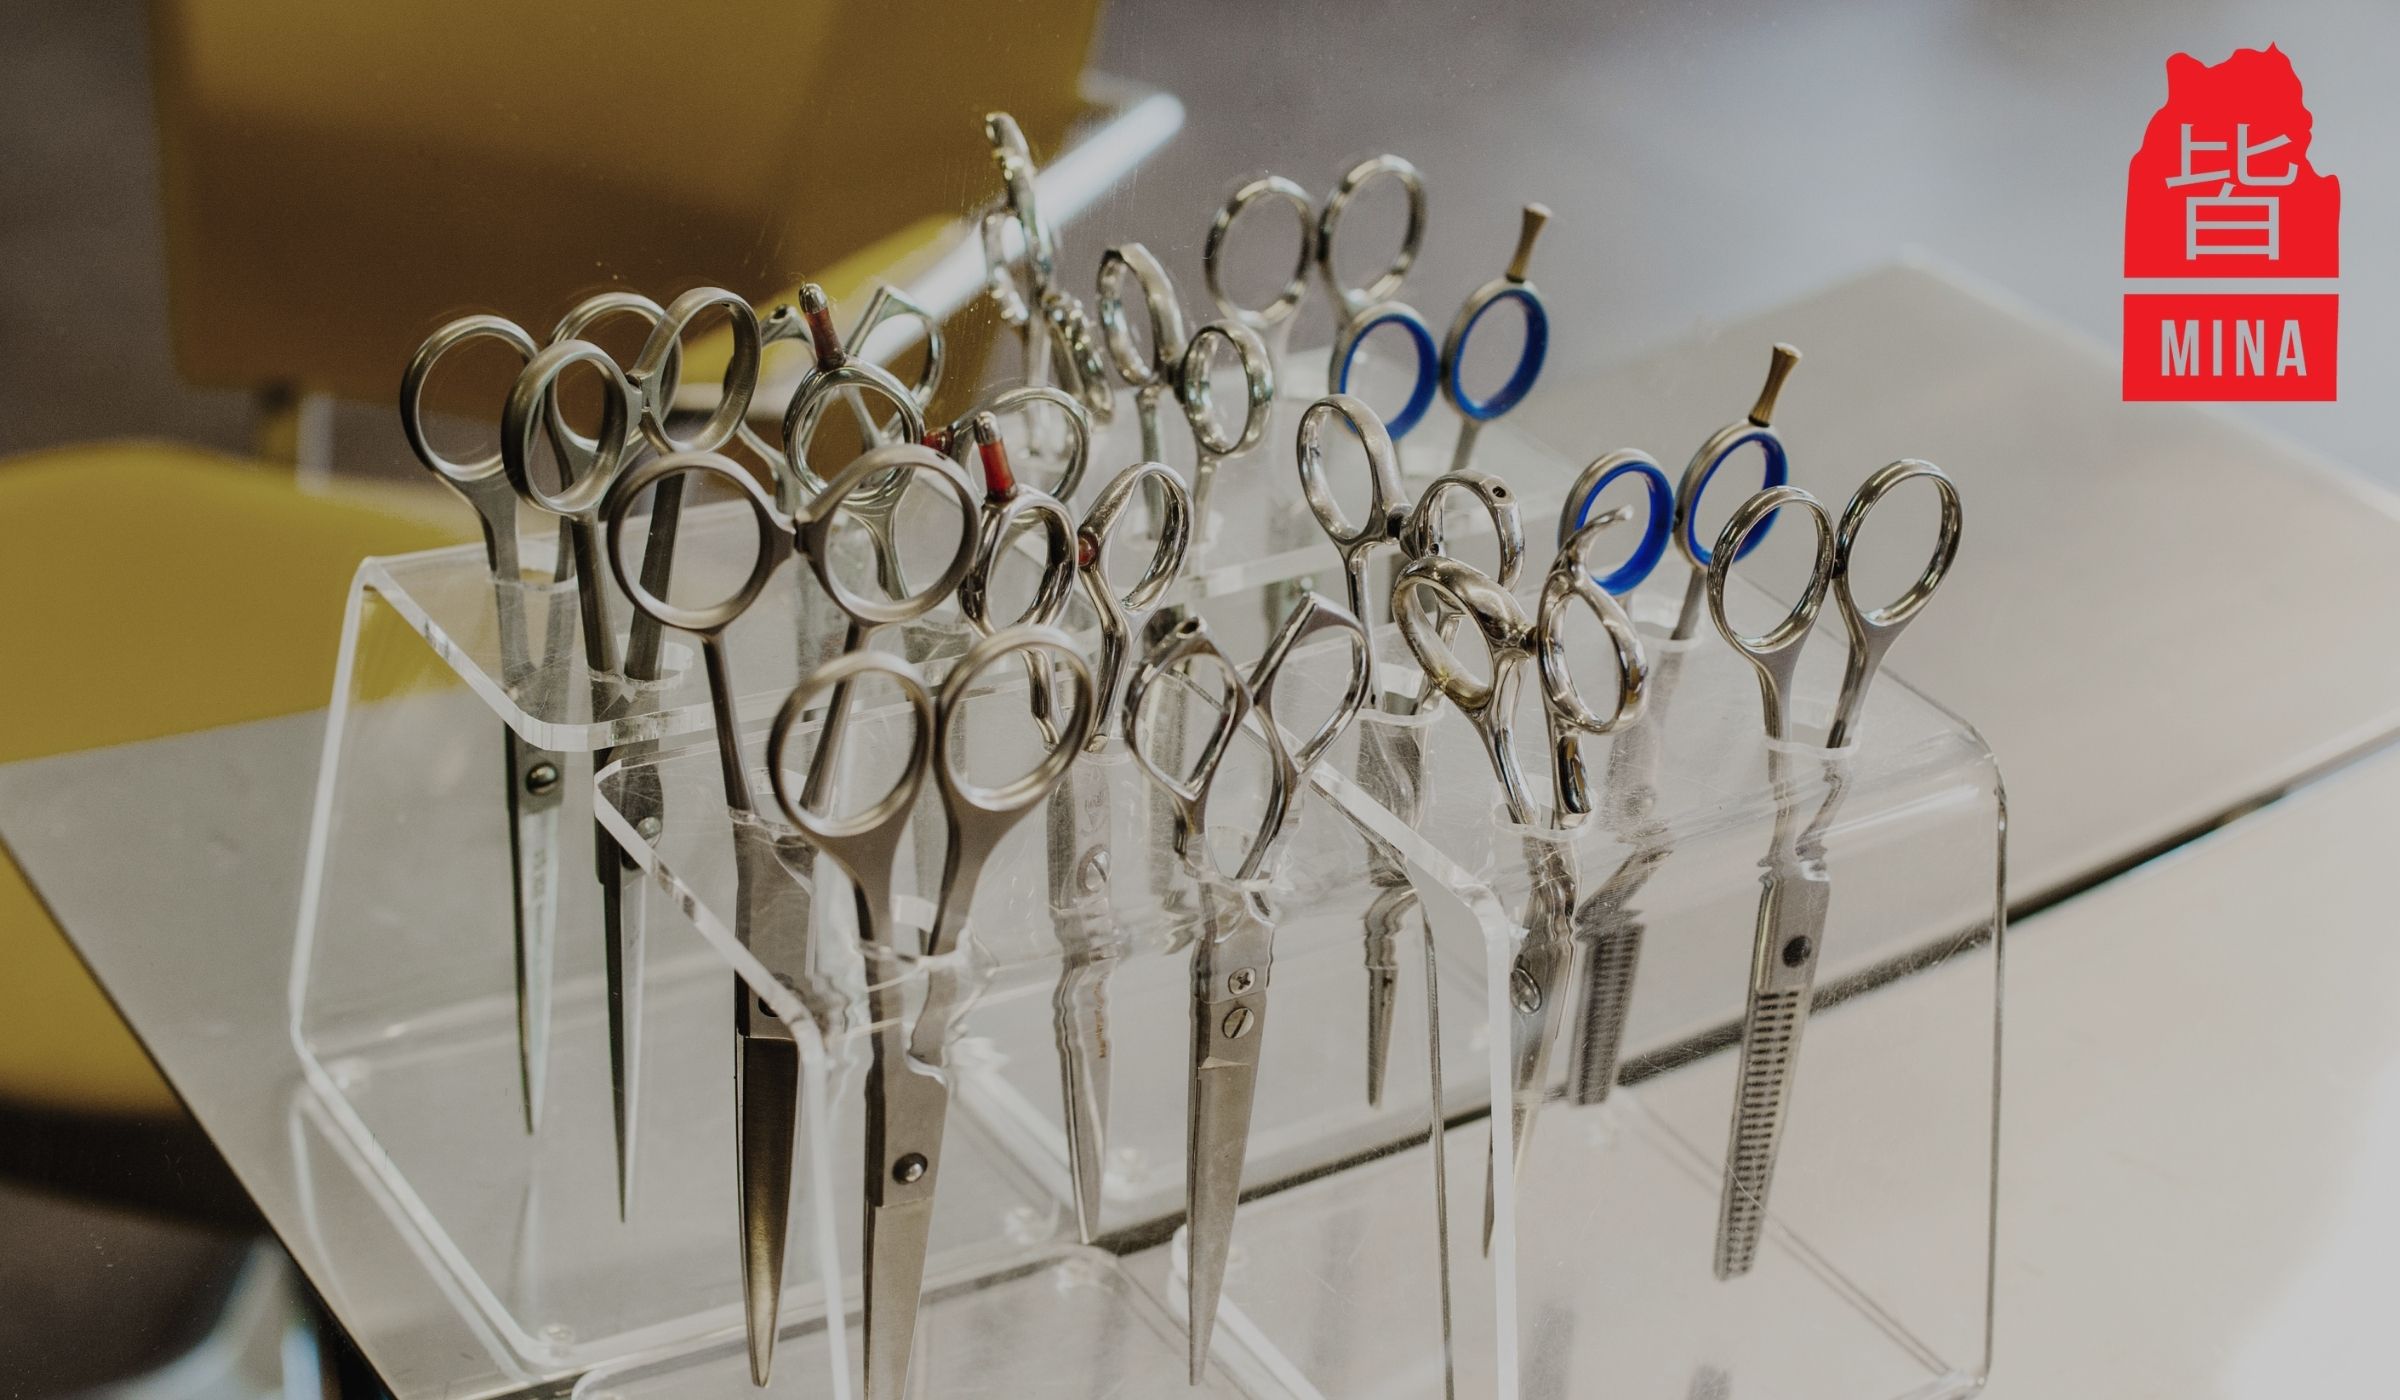 The mina scissors factory for hairdressing shears